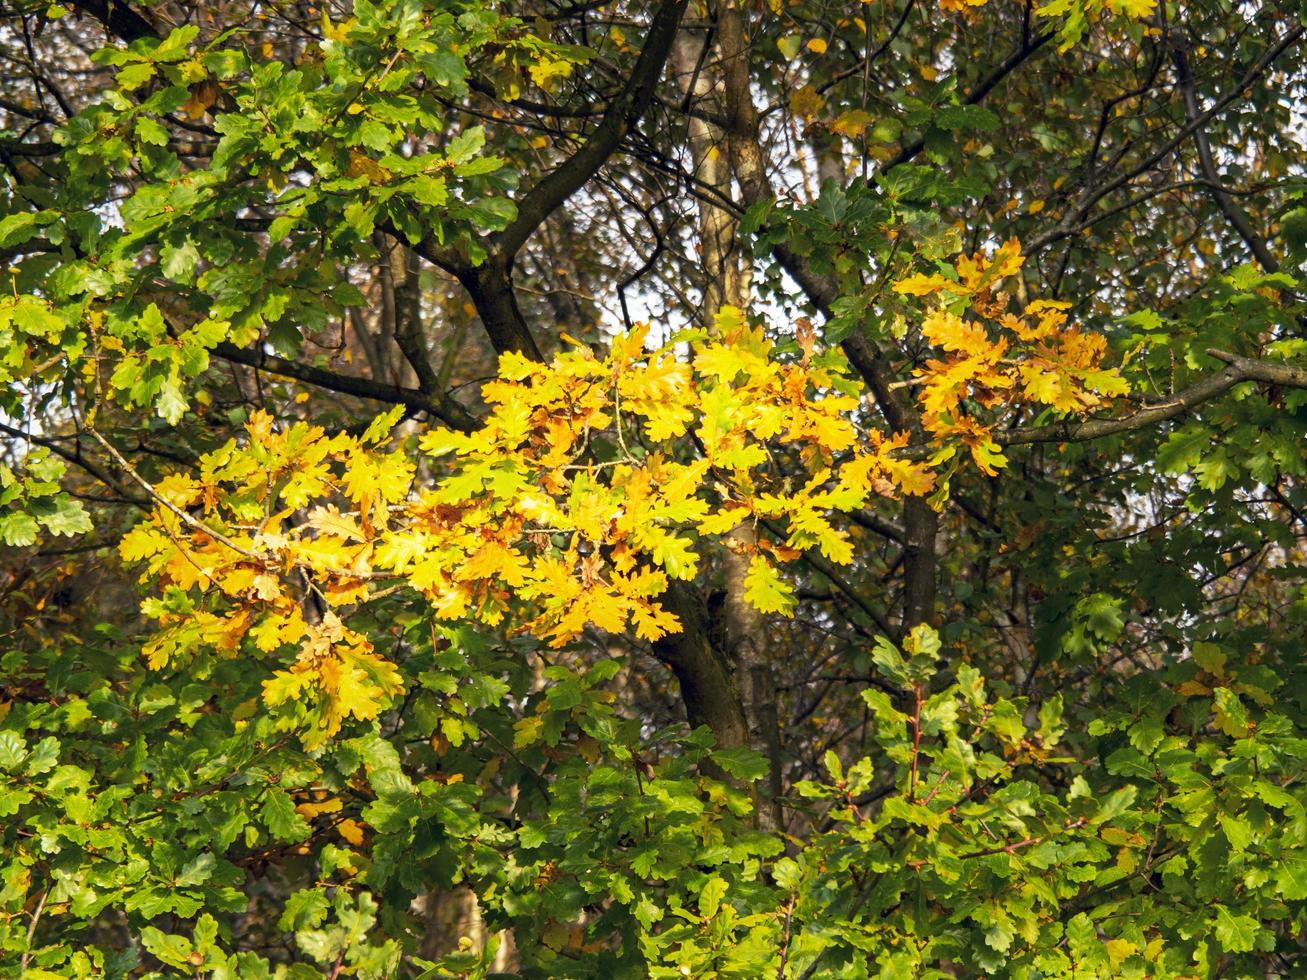 Oak tree leaves turning orange in autumn photo